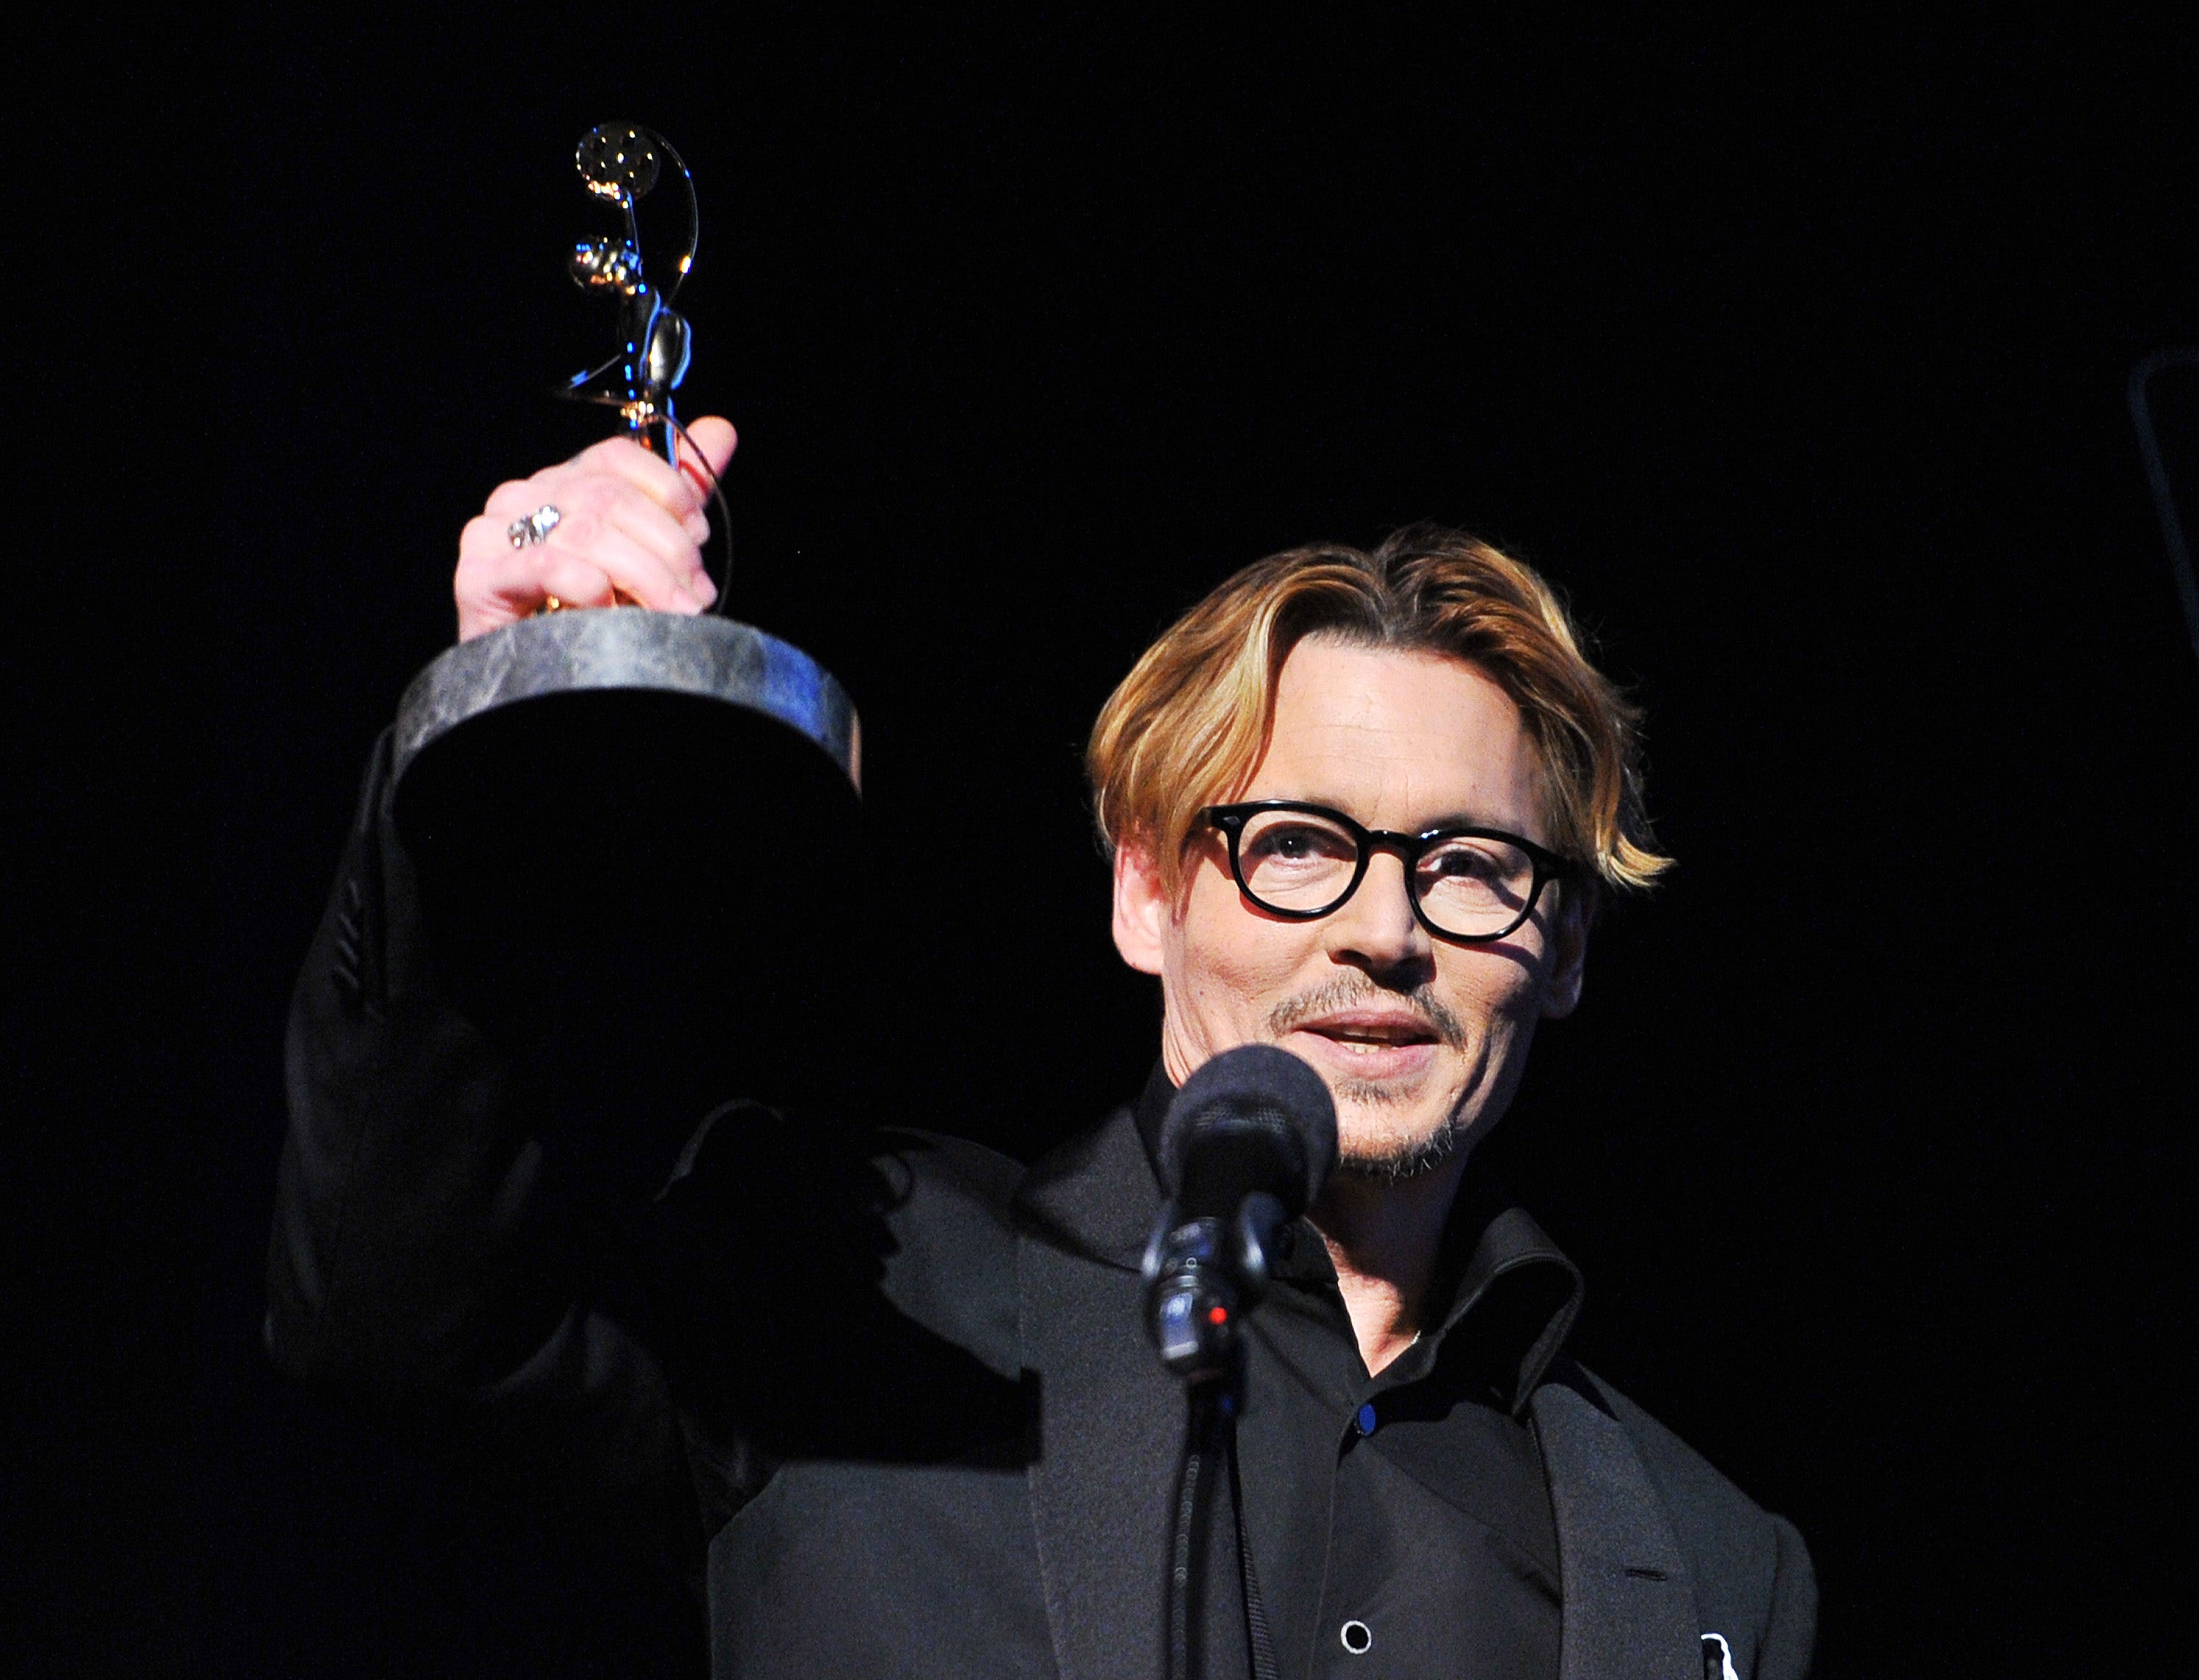 Johnny Depp Academy Awards